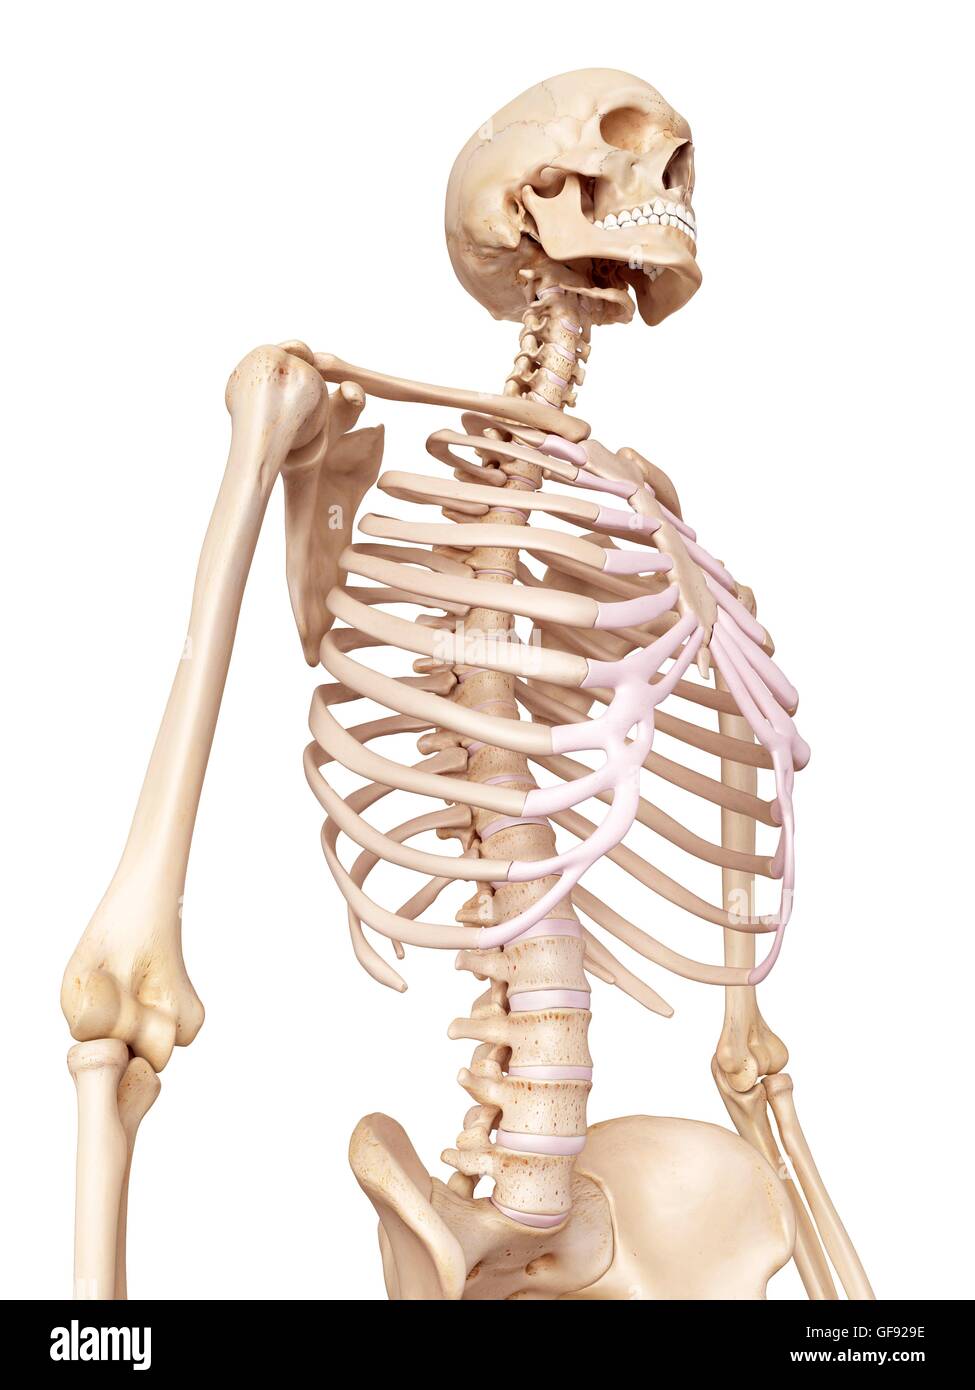 Human skeletal system, illustration Stock Photo - Alamy